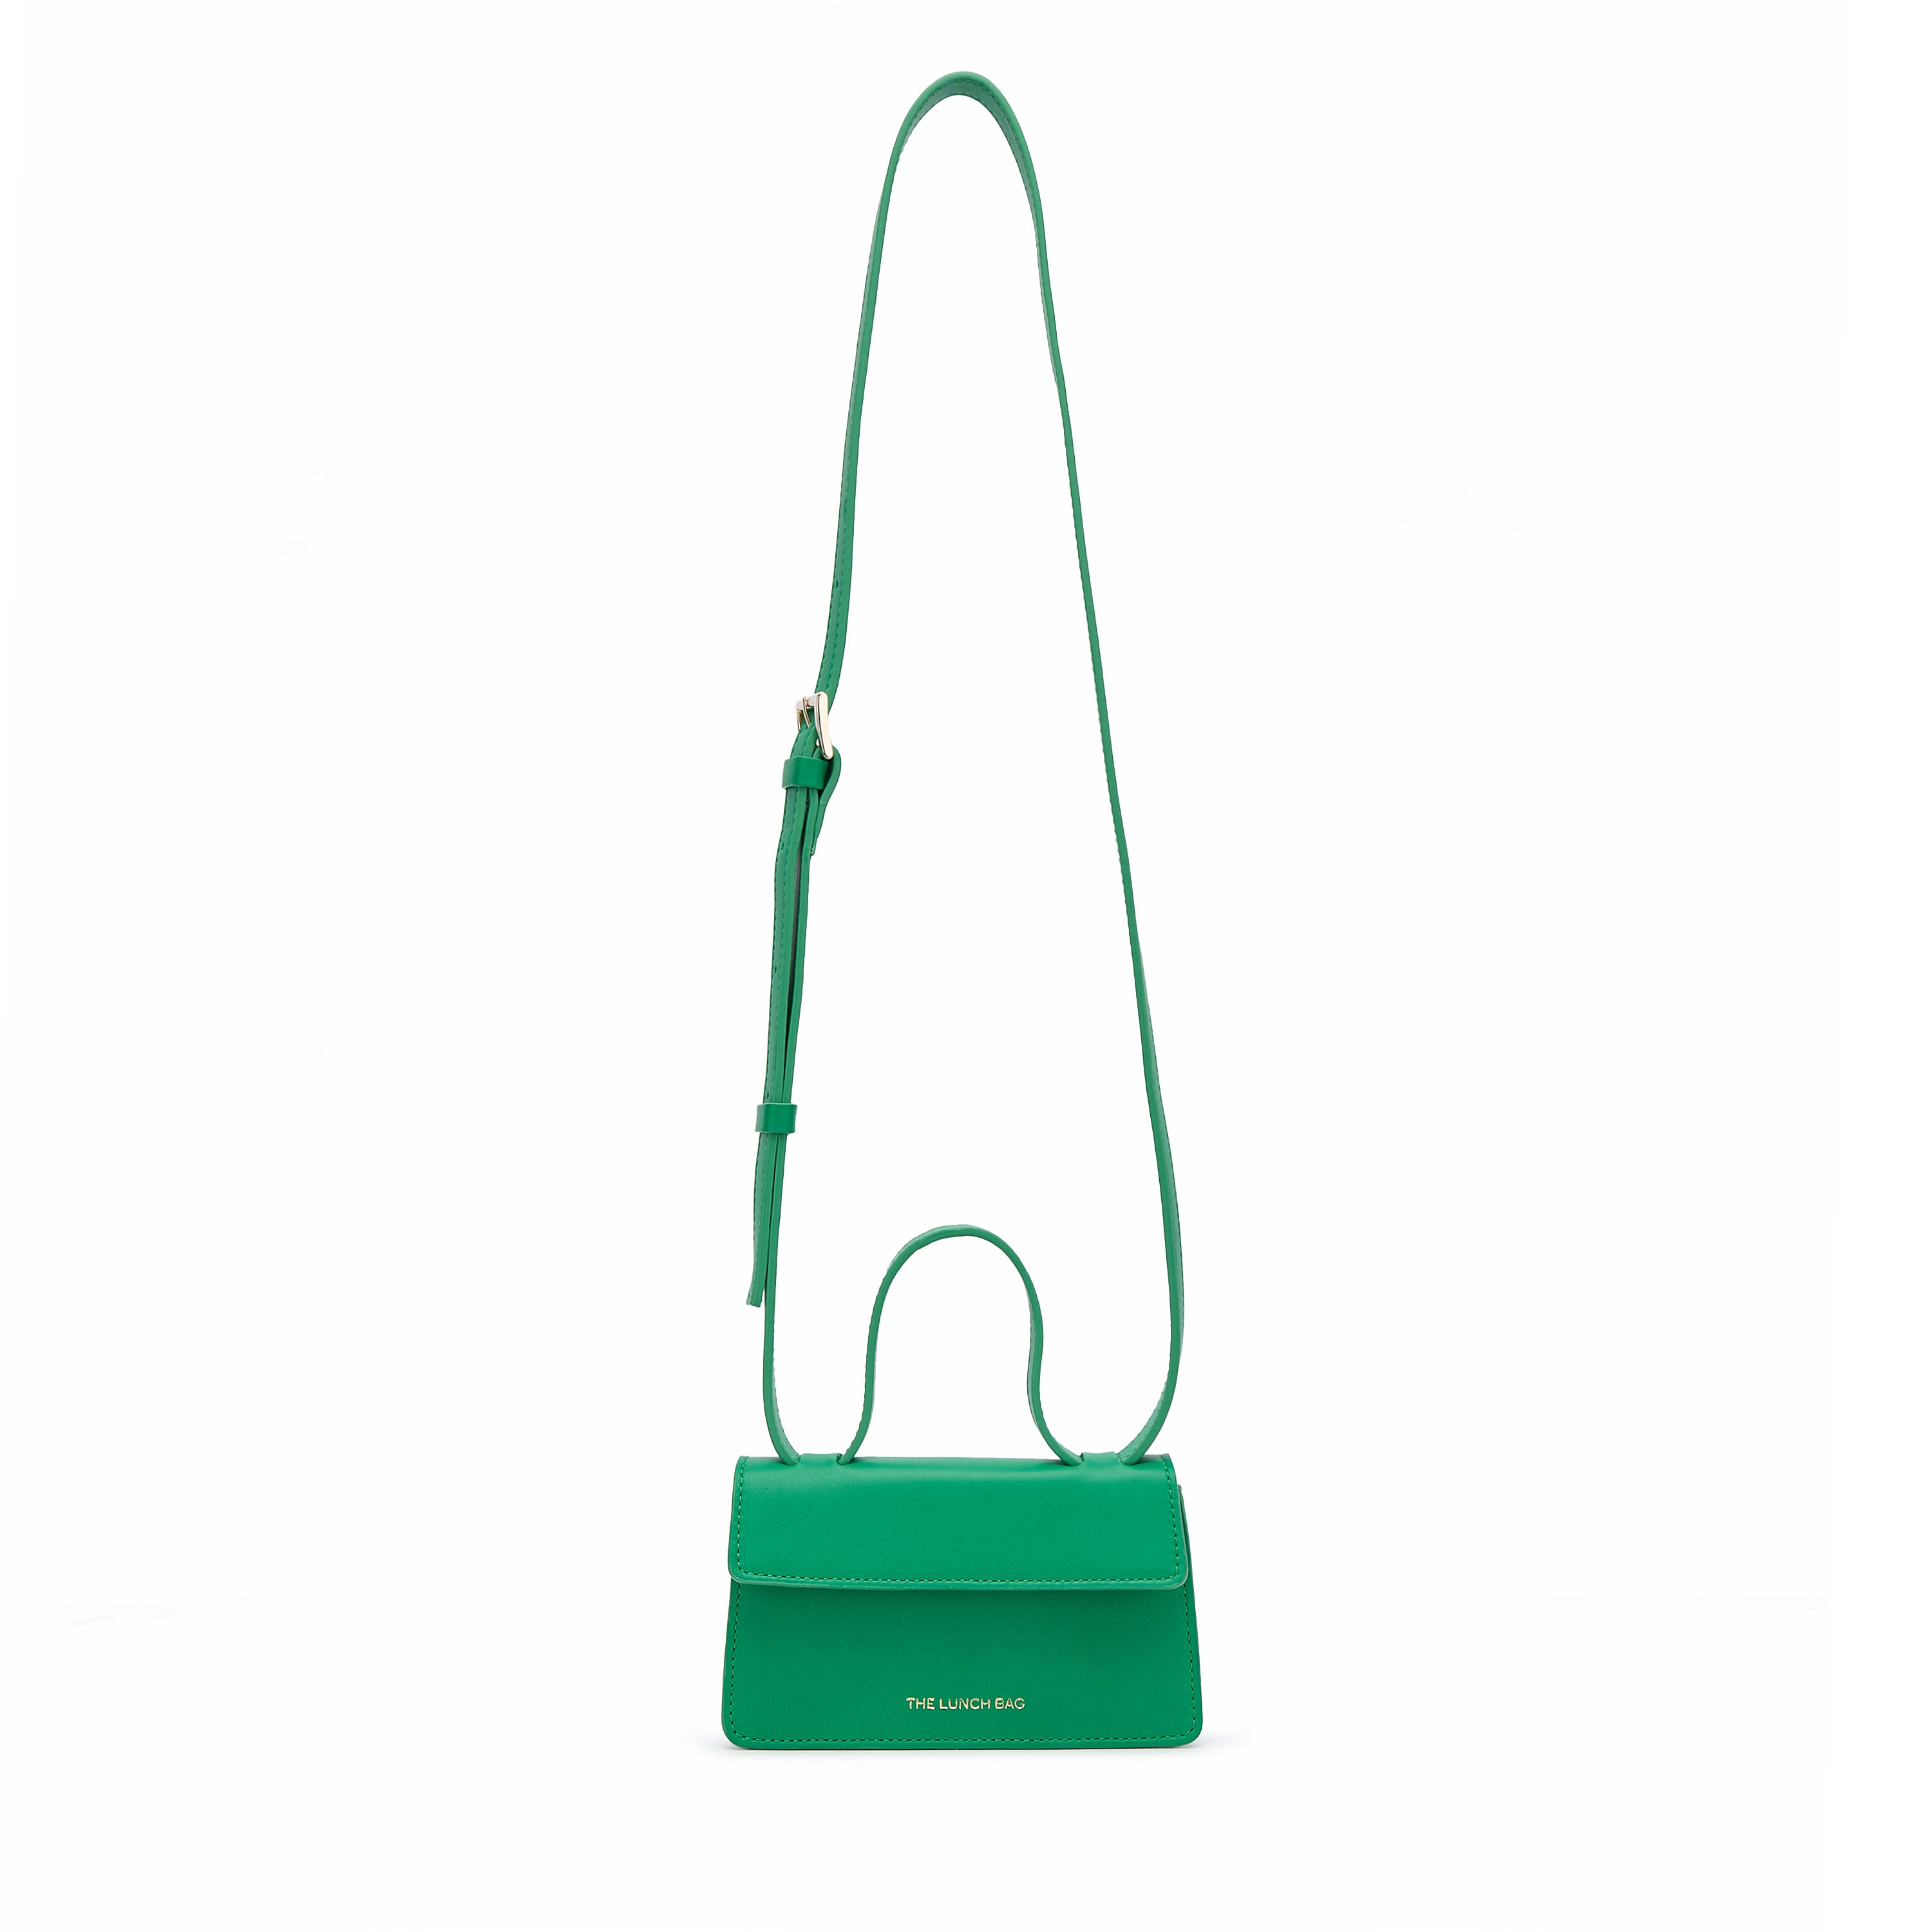 Mini lunch bag green